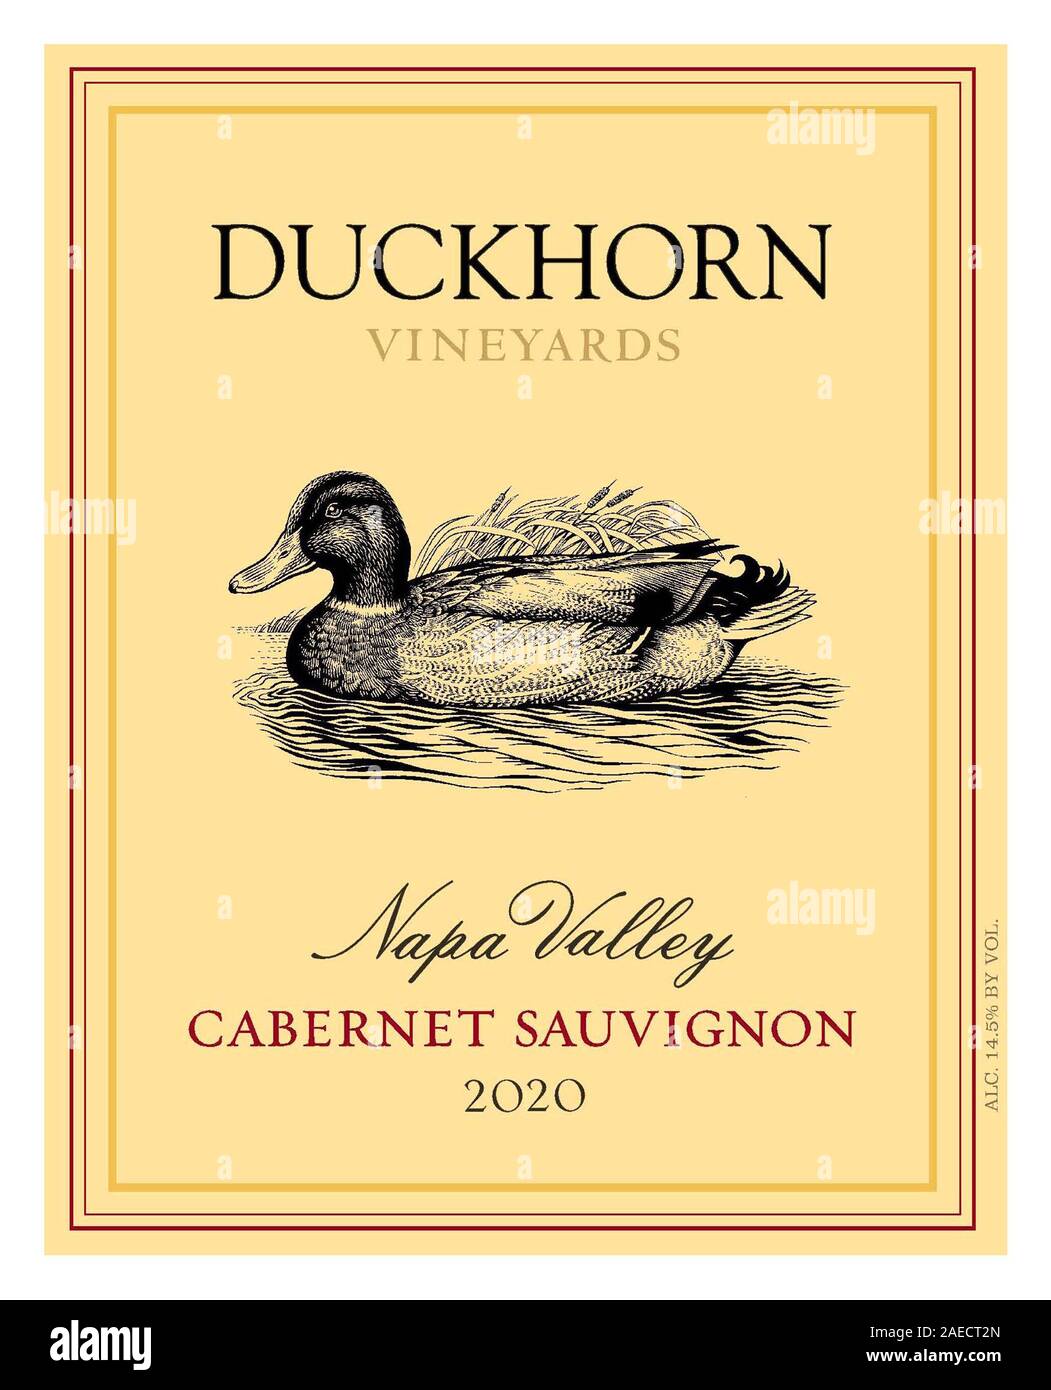 DUCKHORN Cabernet Sauvignon 2020 red wine bottle label Napa Valley California USA Stock Photo